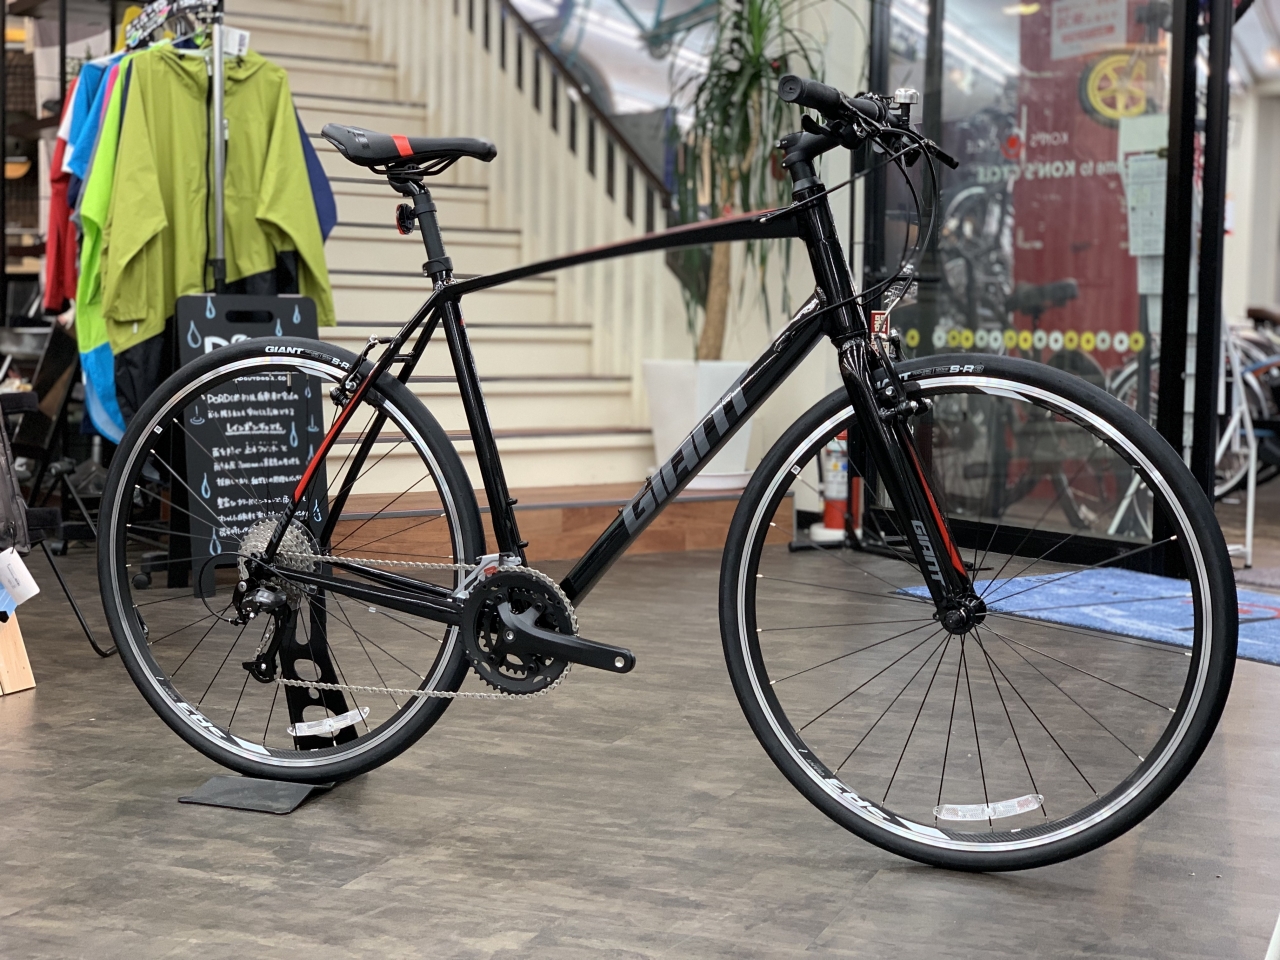 Giantmodel Escape Rx3 入荷 彡 コンズサイクルのスタッフブログ コンズサイクル Kon S Cycle 京都の自転車ショップ